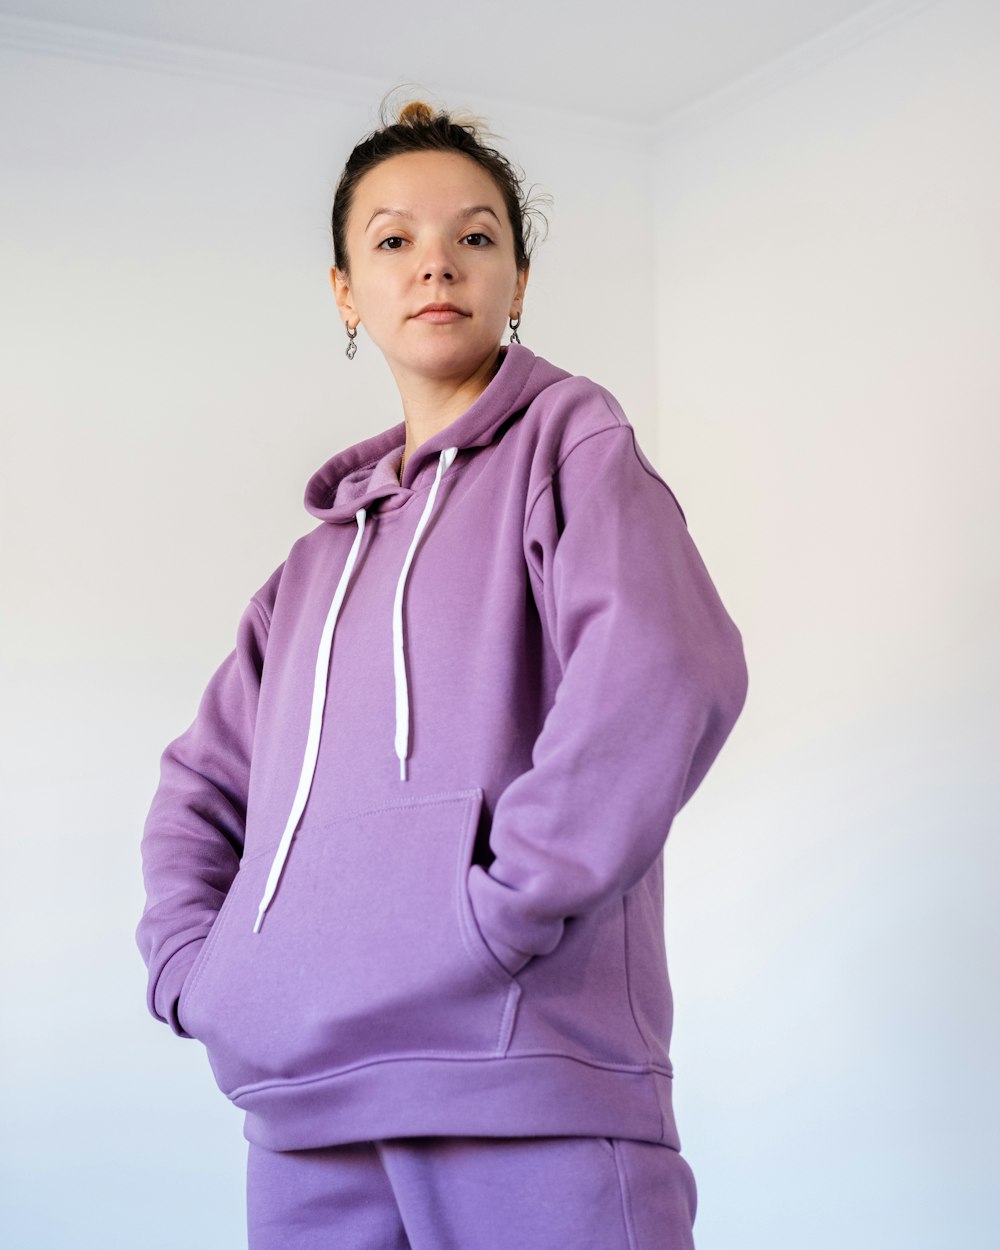 A woman in a purple sweatshirt and sweatpants photo – Free Knitwear Image  on Unsplash